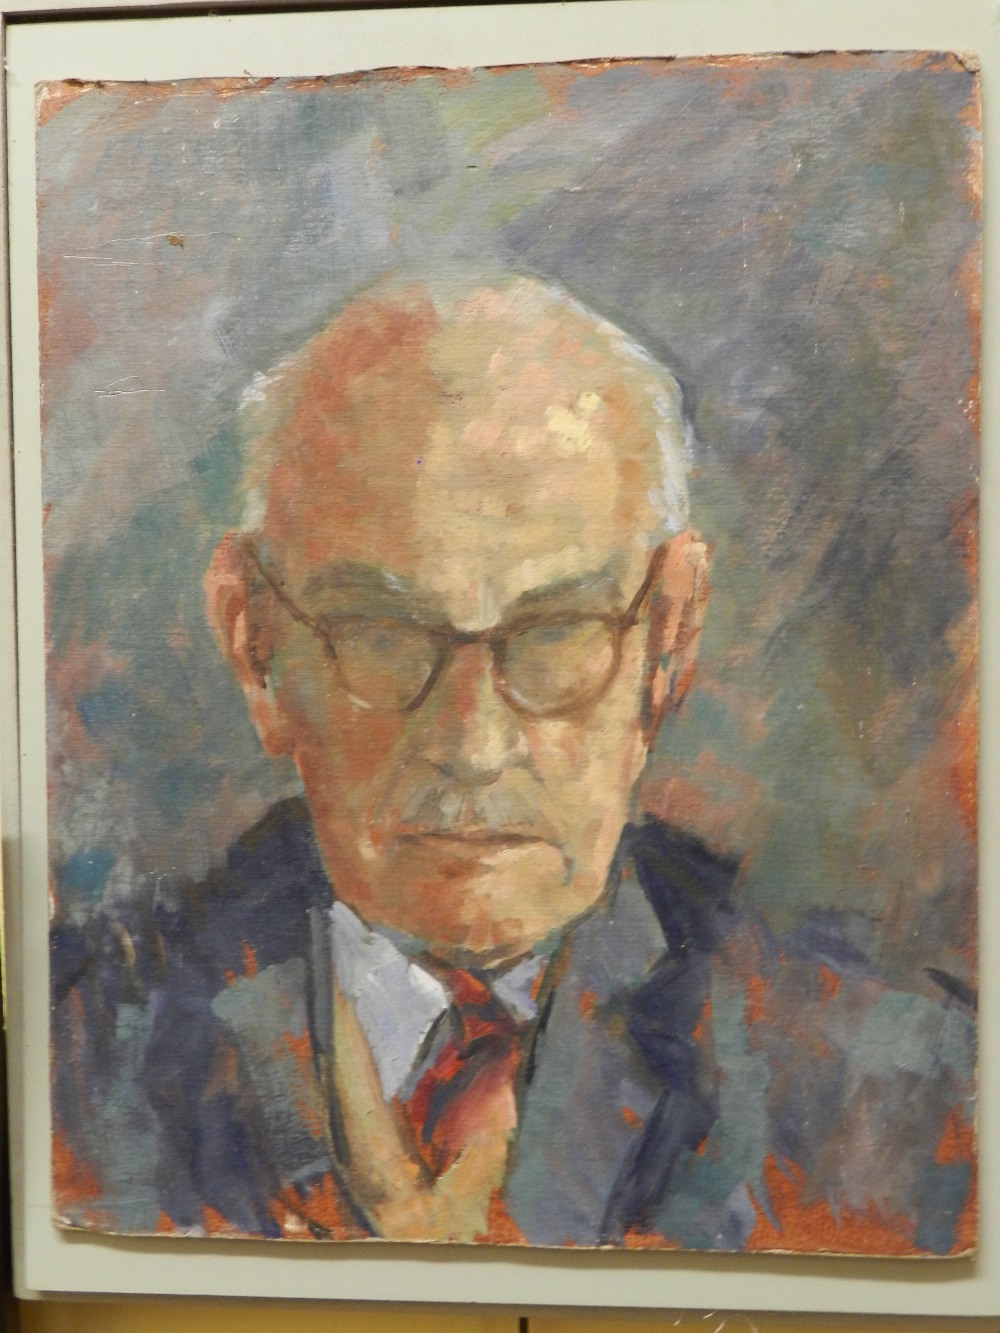 20th century British school, portrait of an elderly gentleman wearing glasses, acrylic on board.